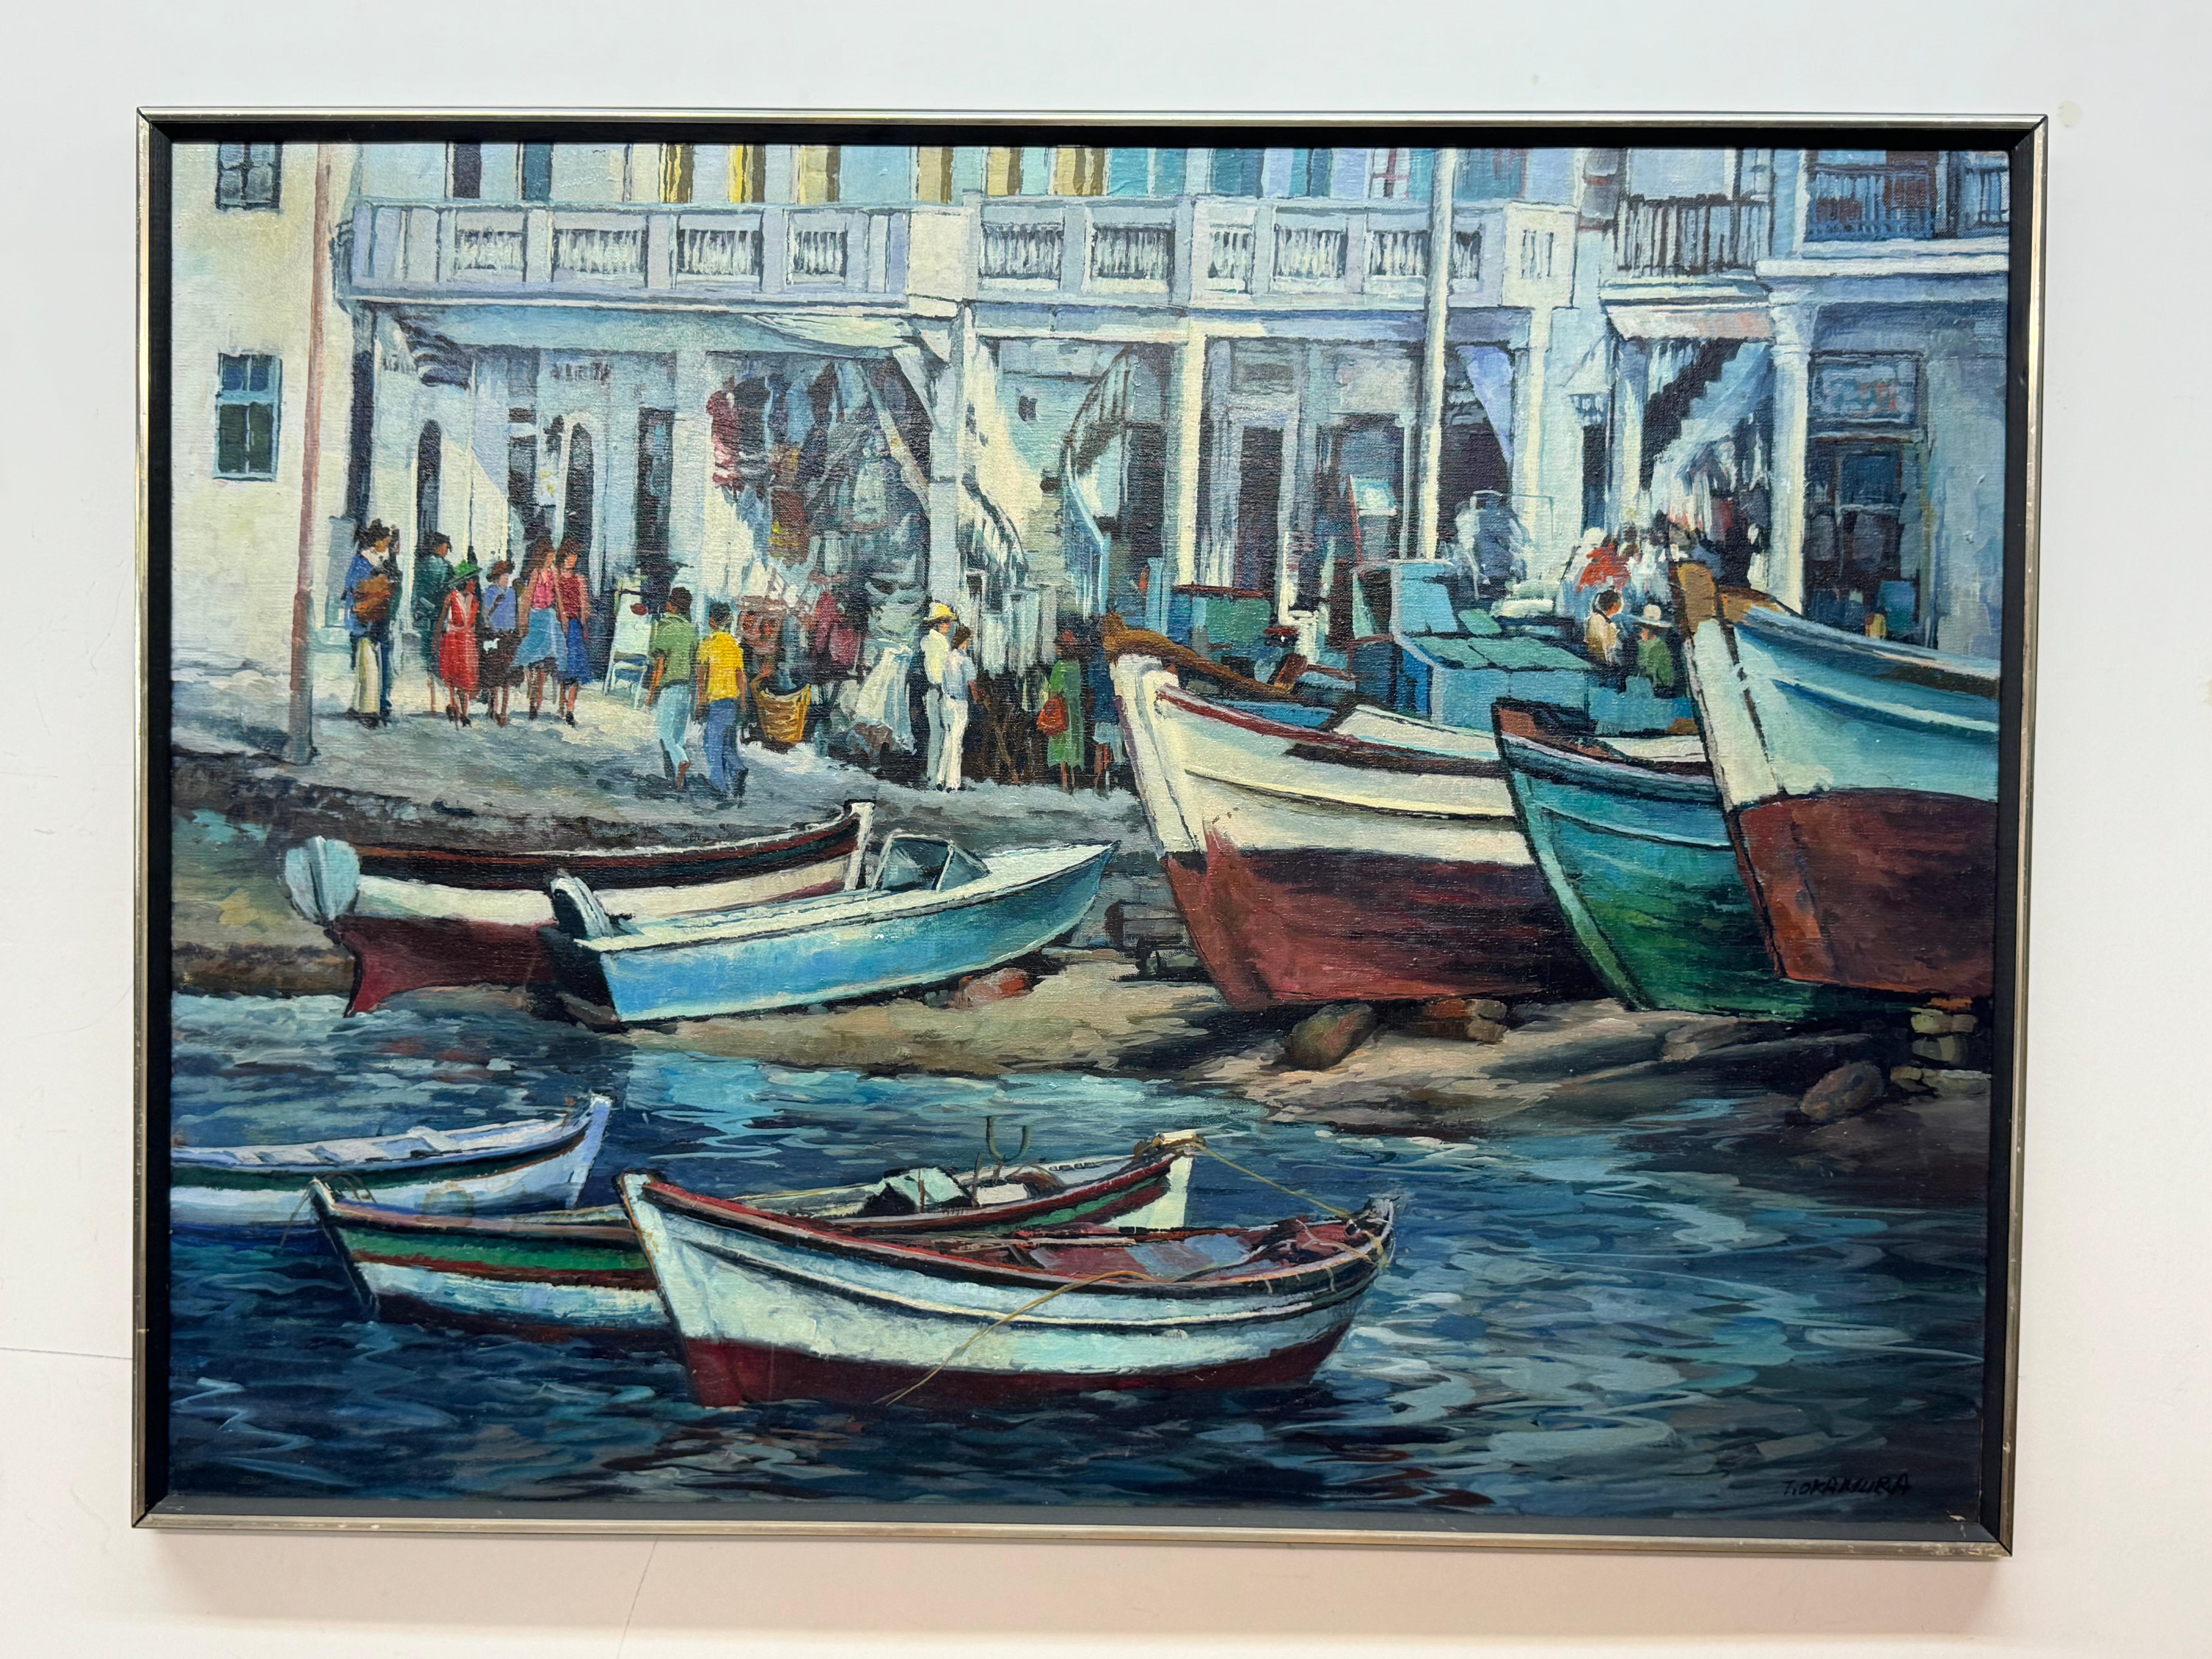 Tomiko Okamura "Greece Harbour" 

Oil on canvas

30 x 40 unframed, 31.25 x 40.25 framed